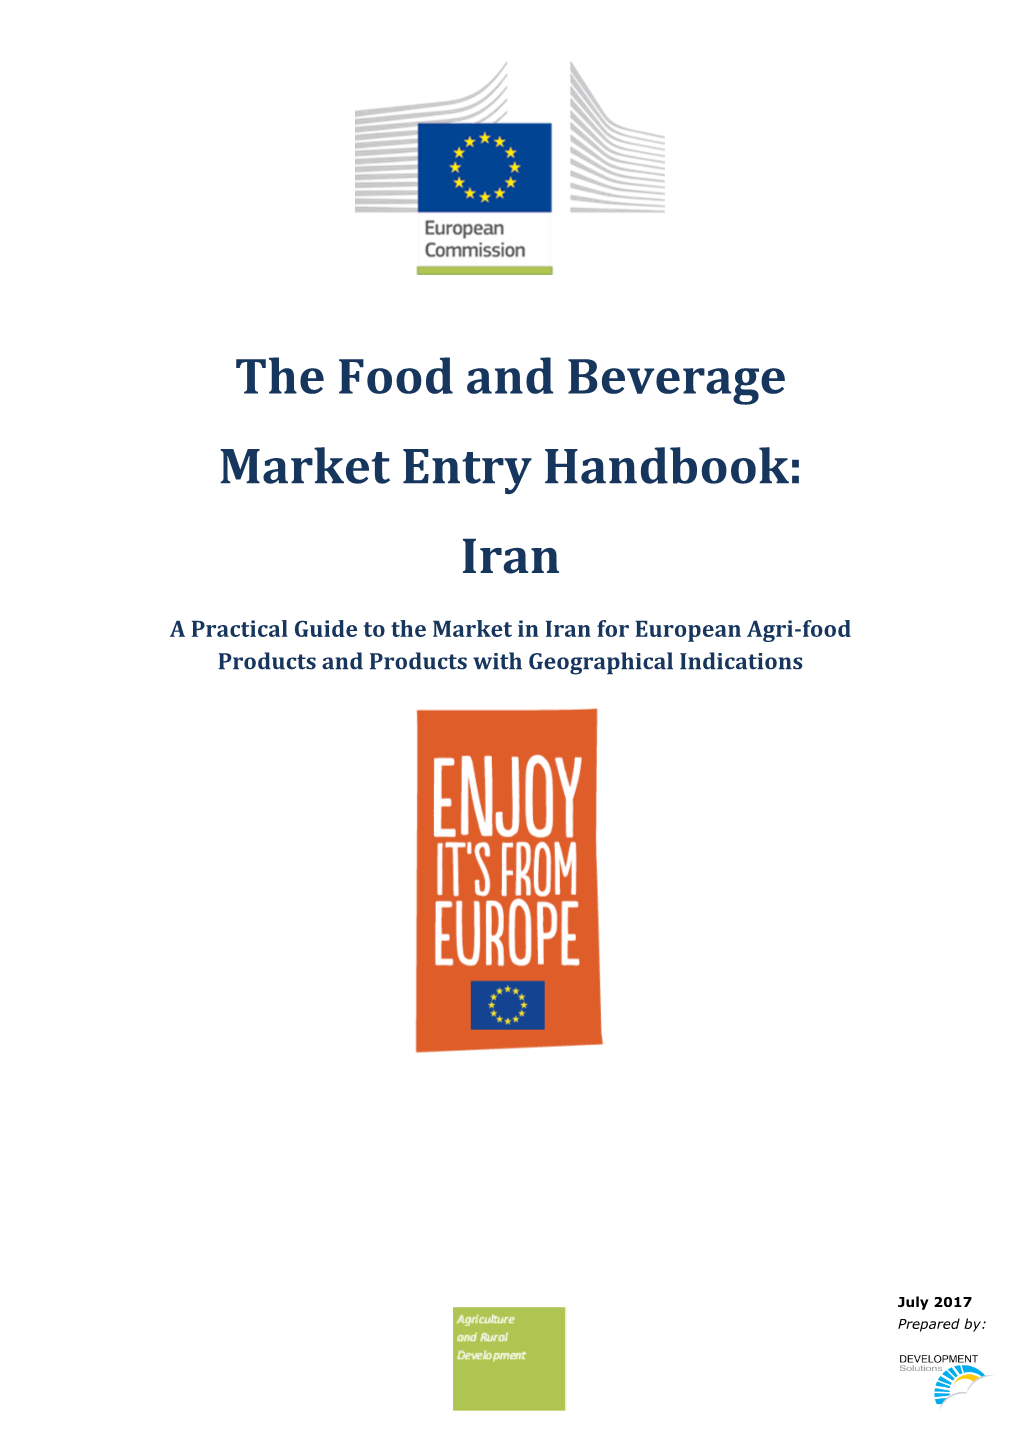 The Food and Beverage Market Entry Handbook: Iran